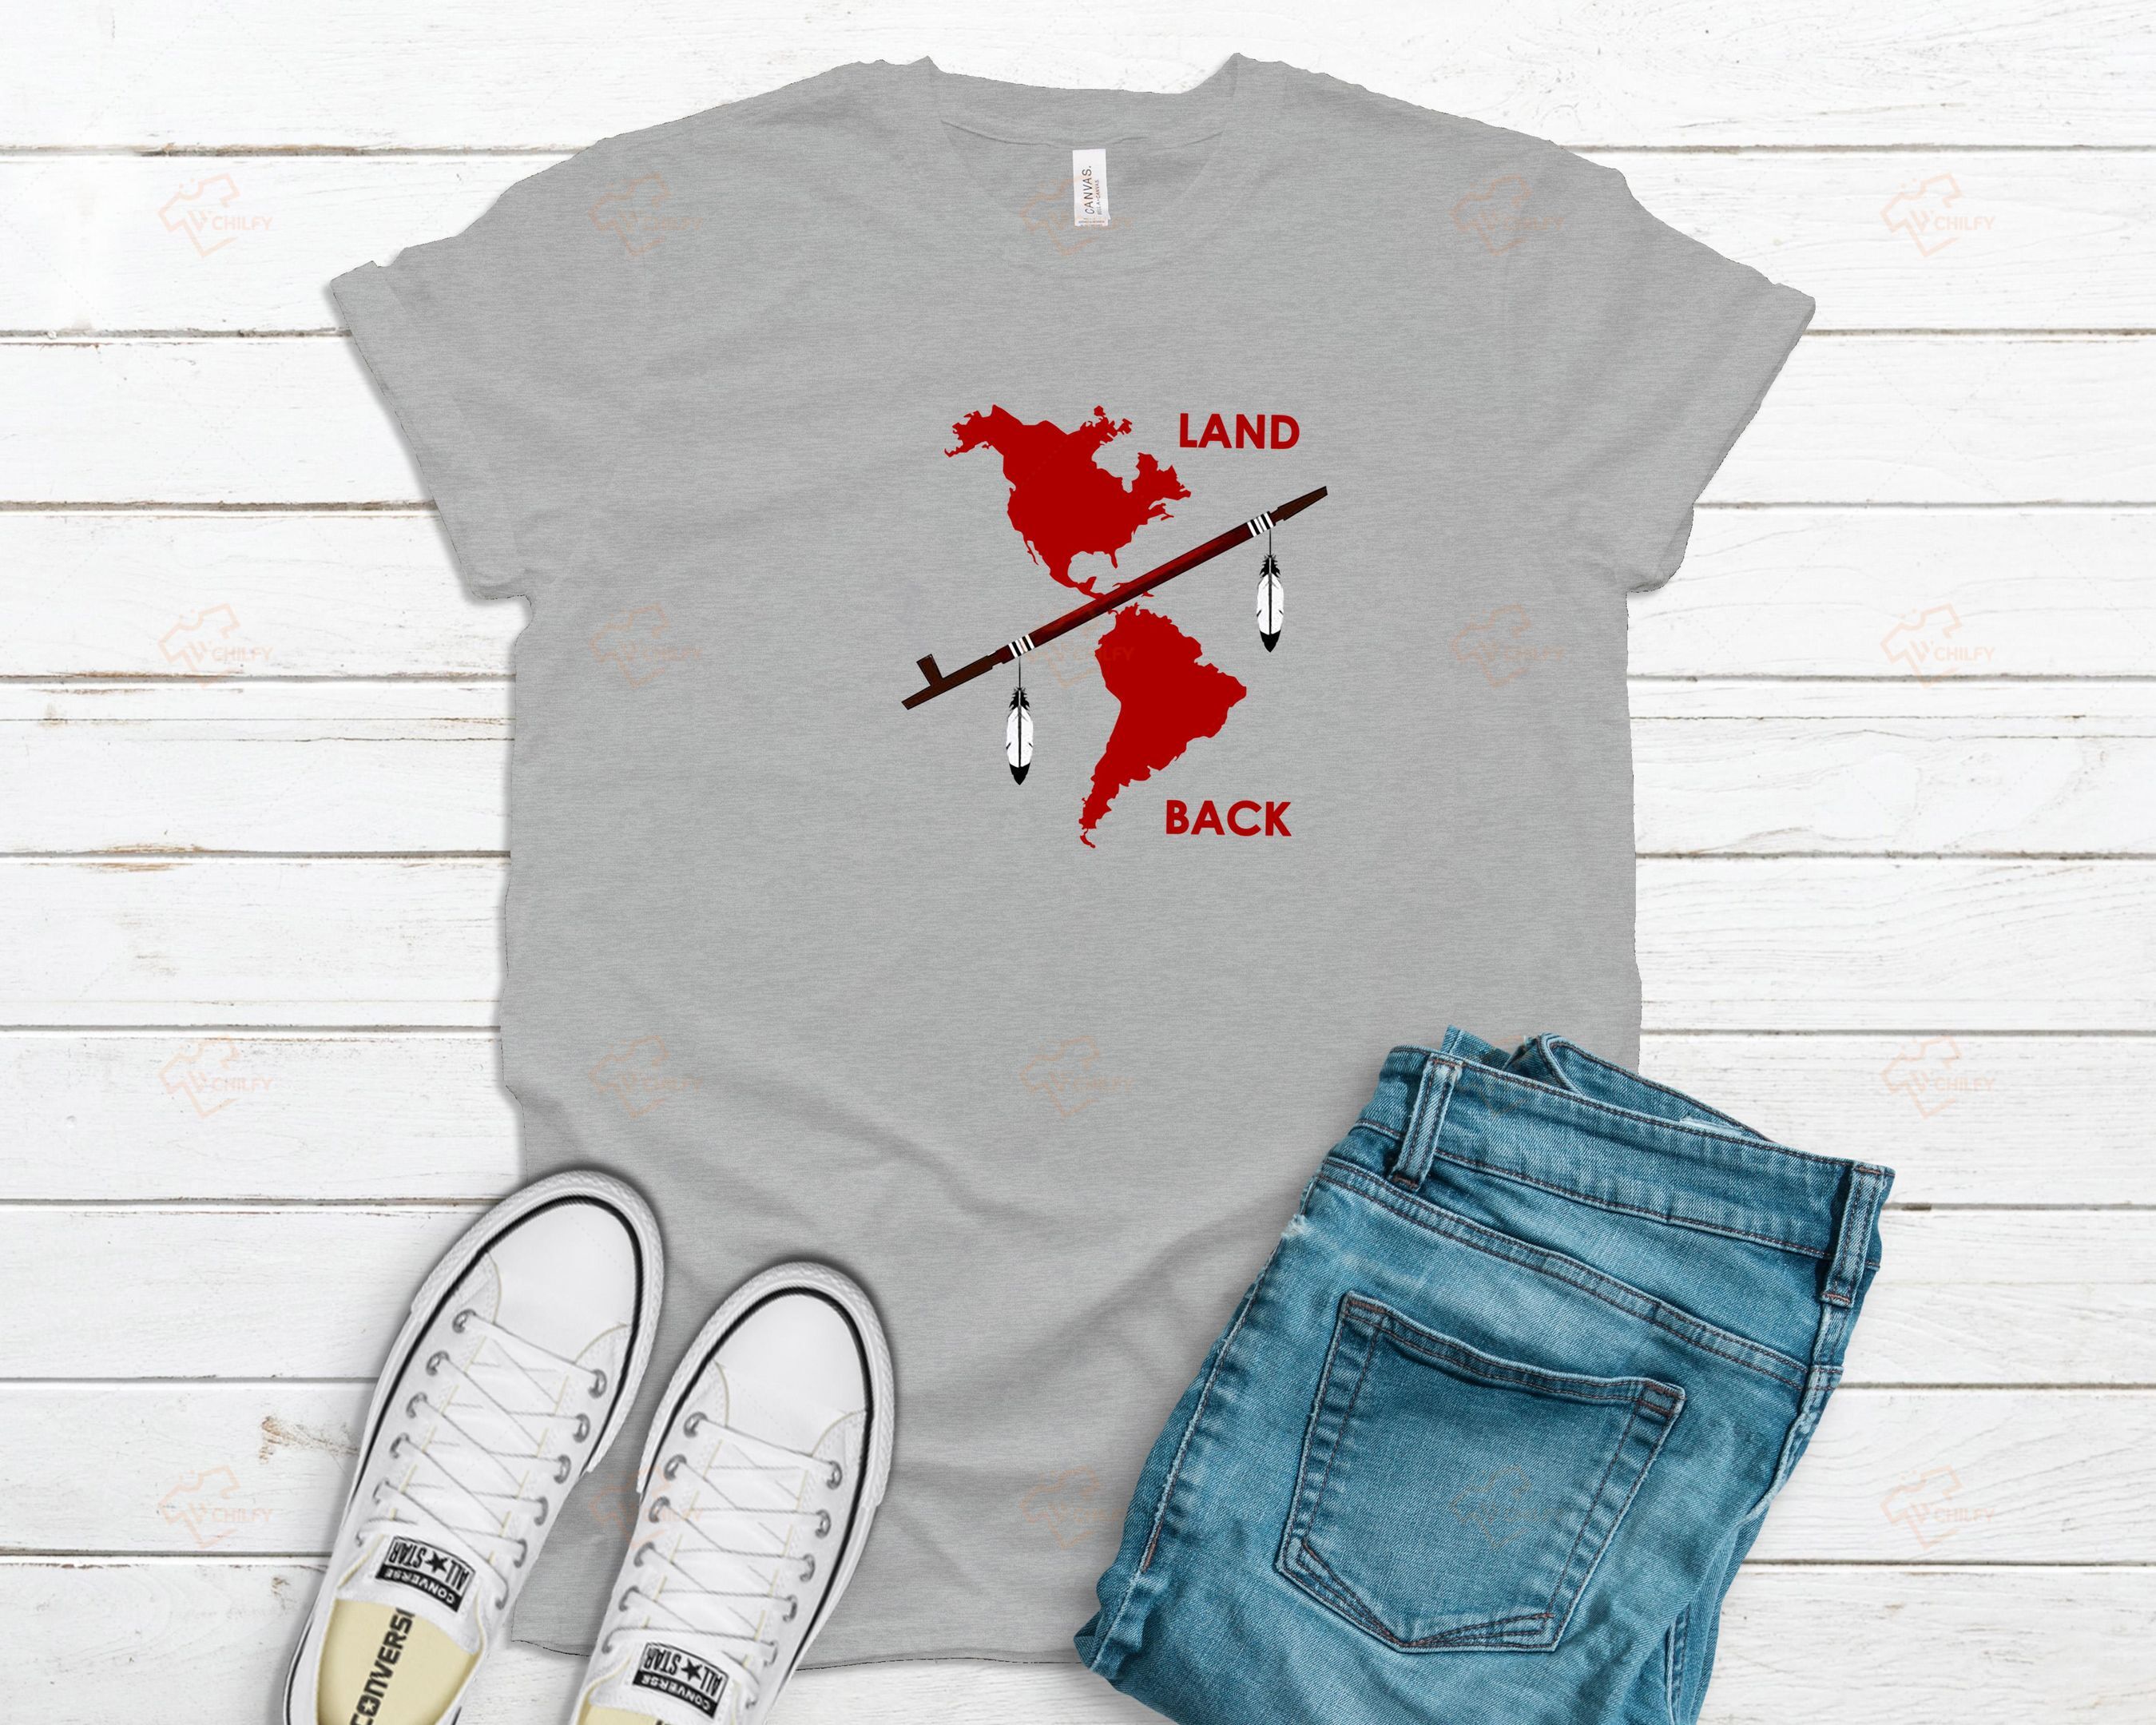 Land back t-shirt, land back shirt, it’s all Native land shirt, shirt for Native American, NDN pride shirt